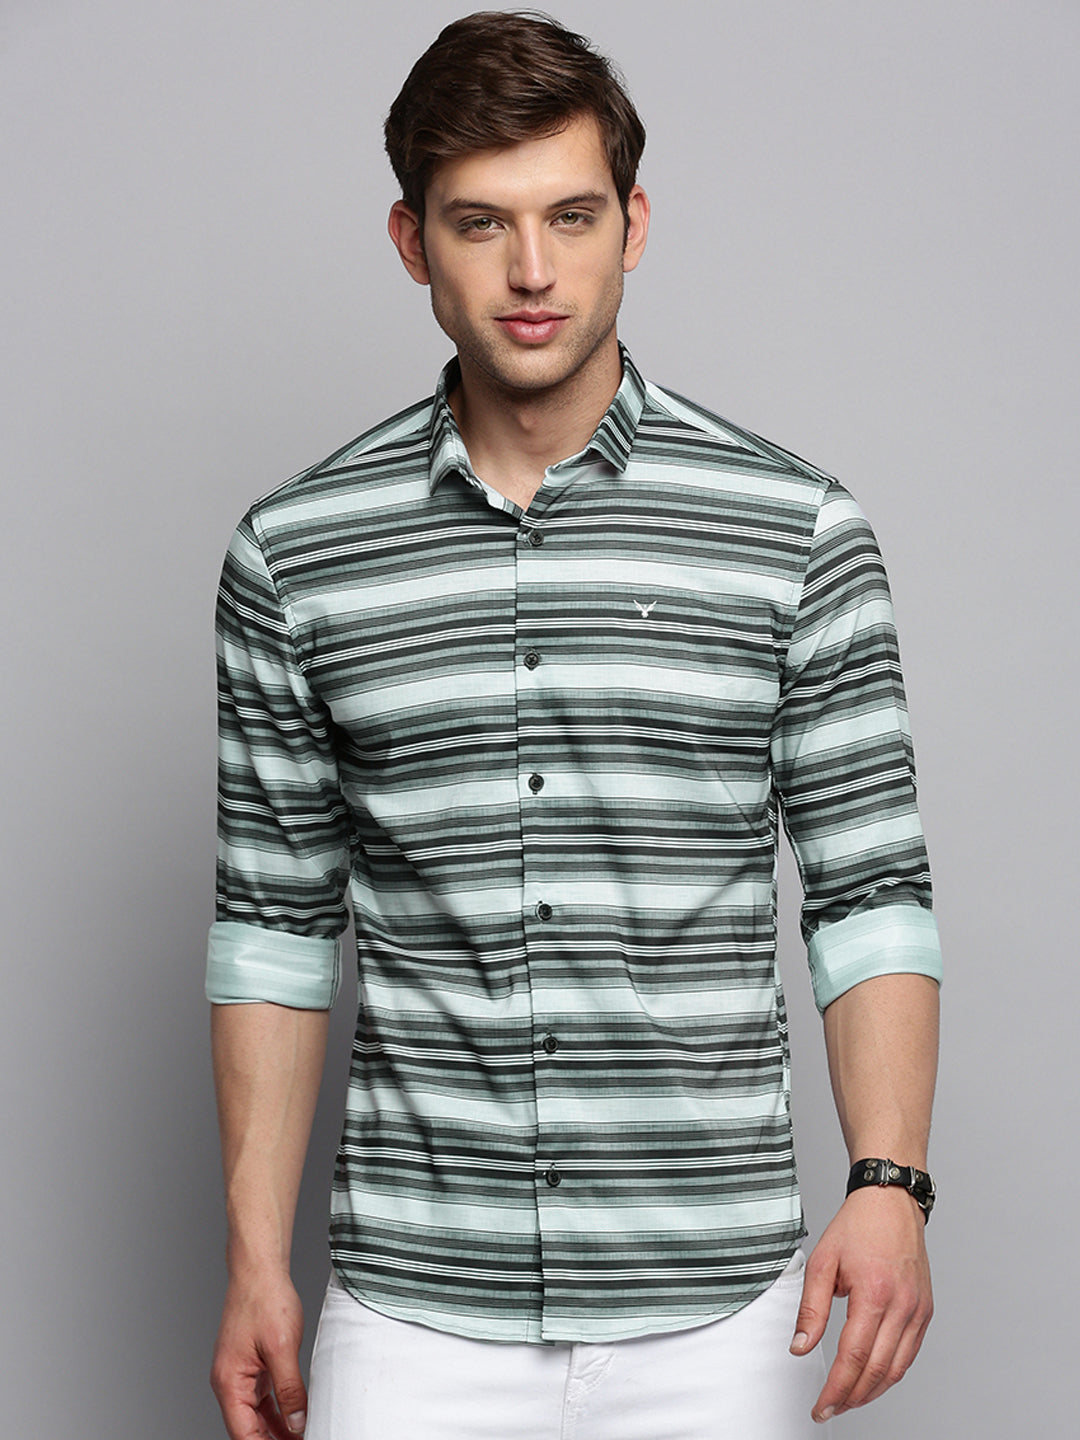 Men Green Striped Formal Shirt